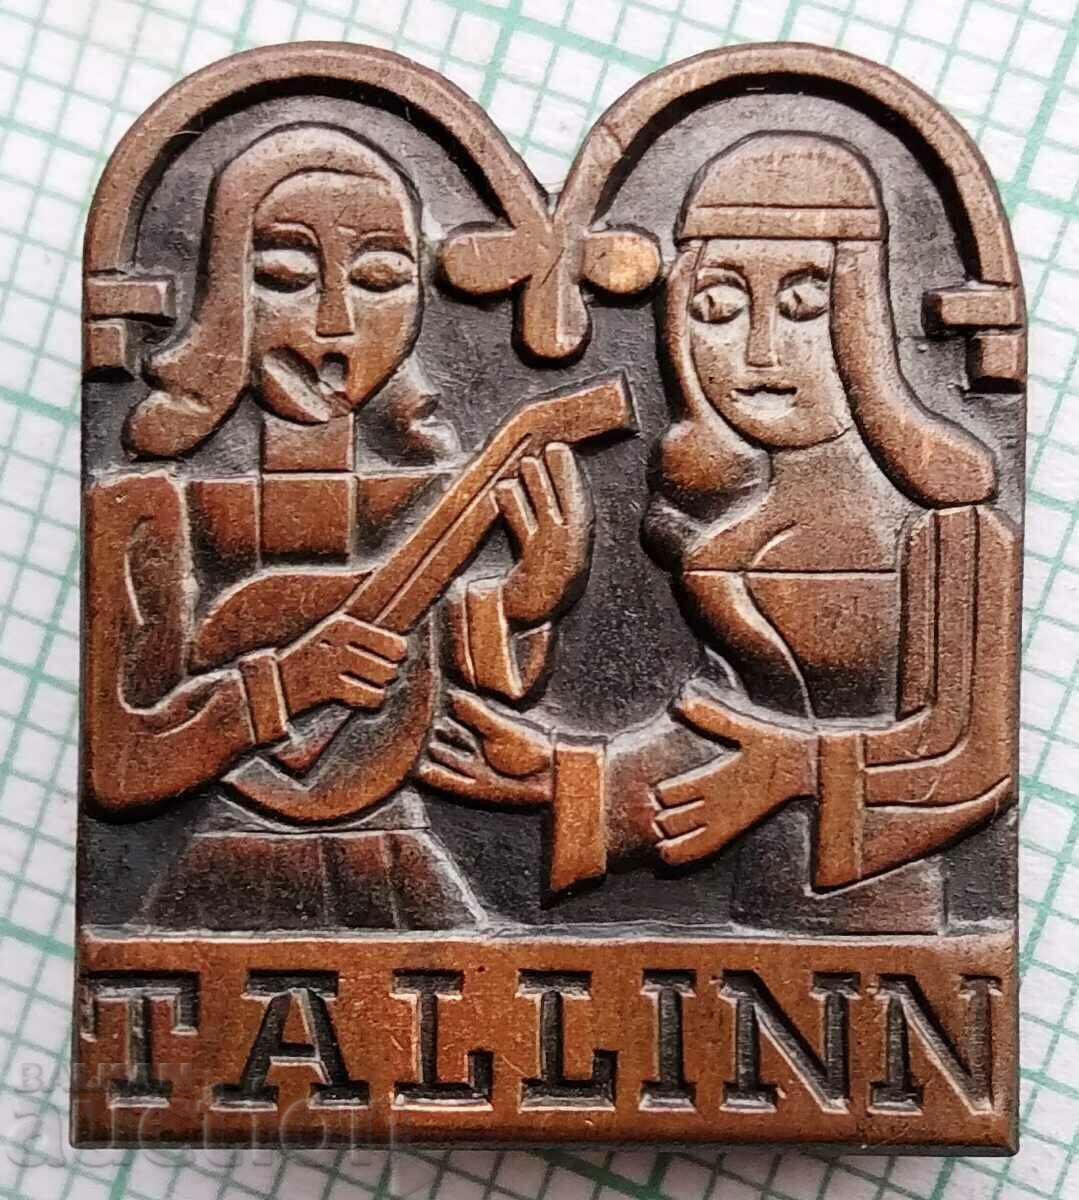 13038 Badge - Tallinn Estonia